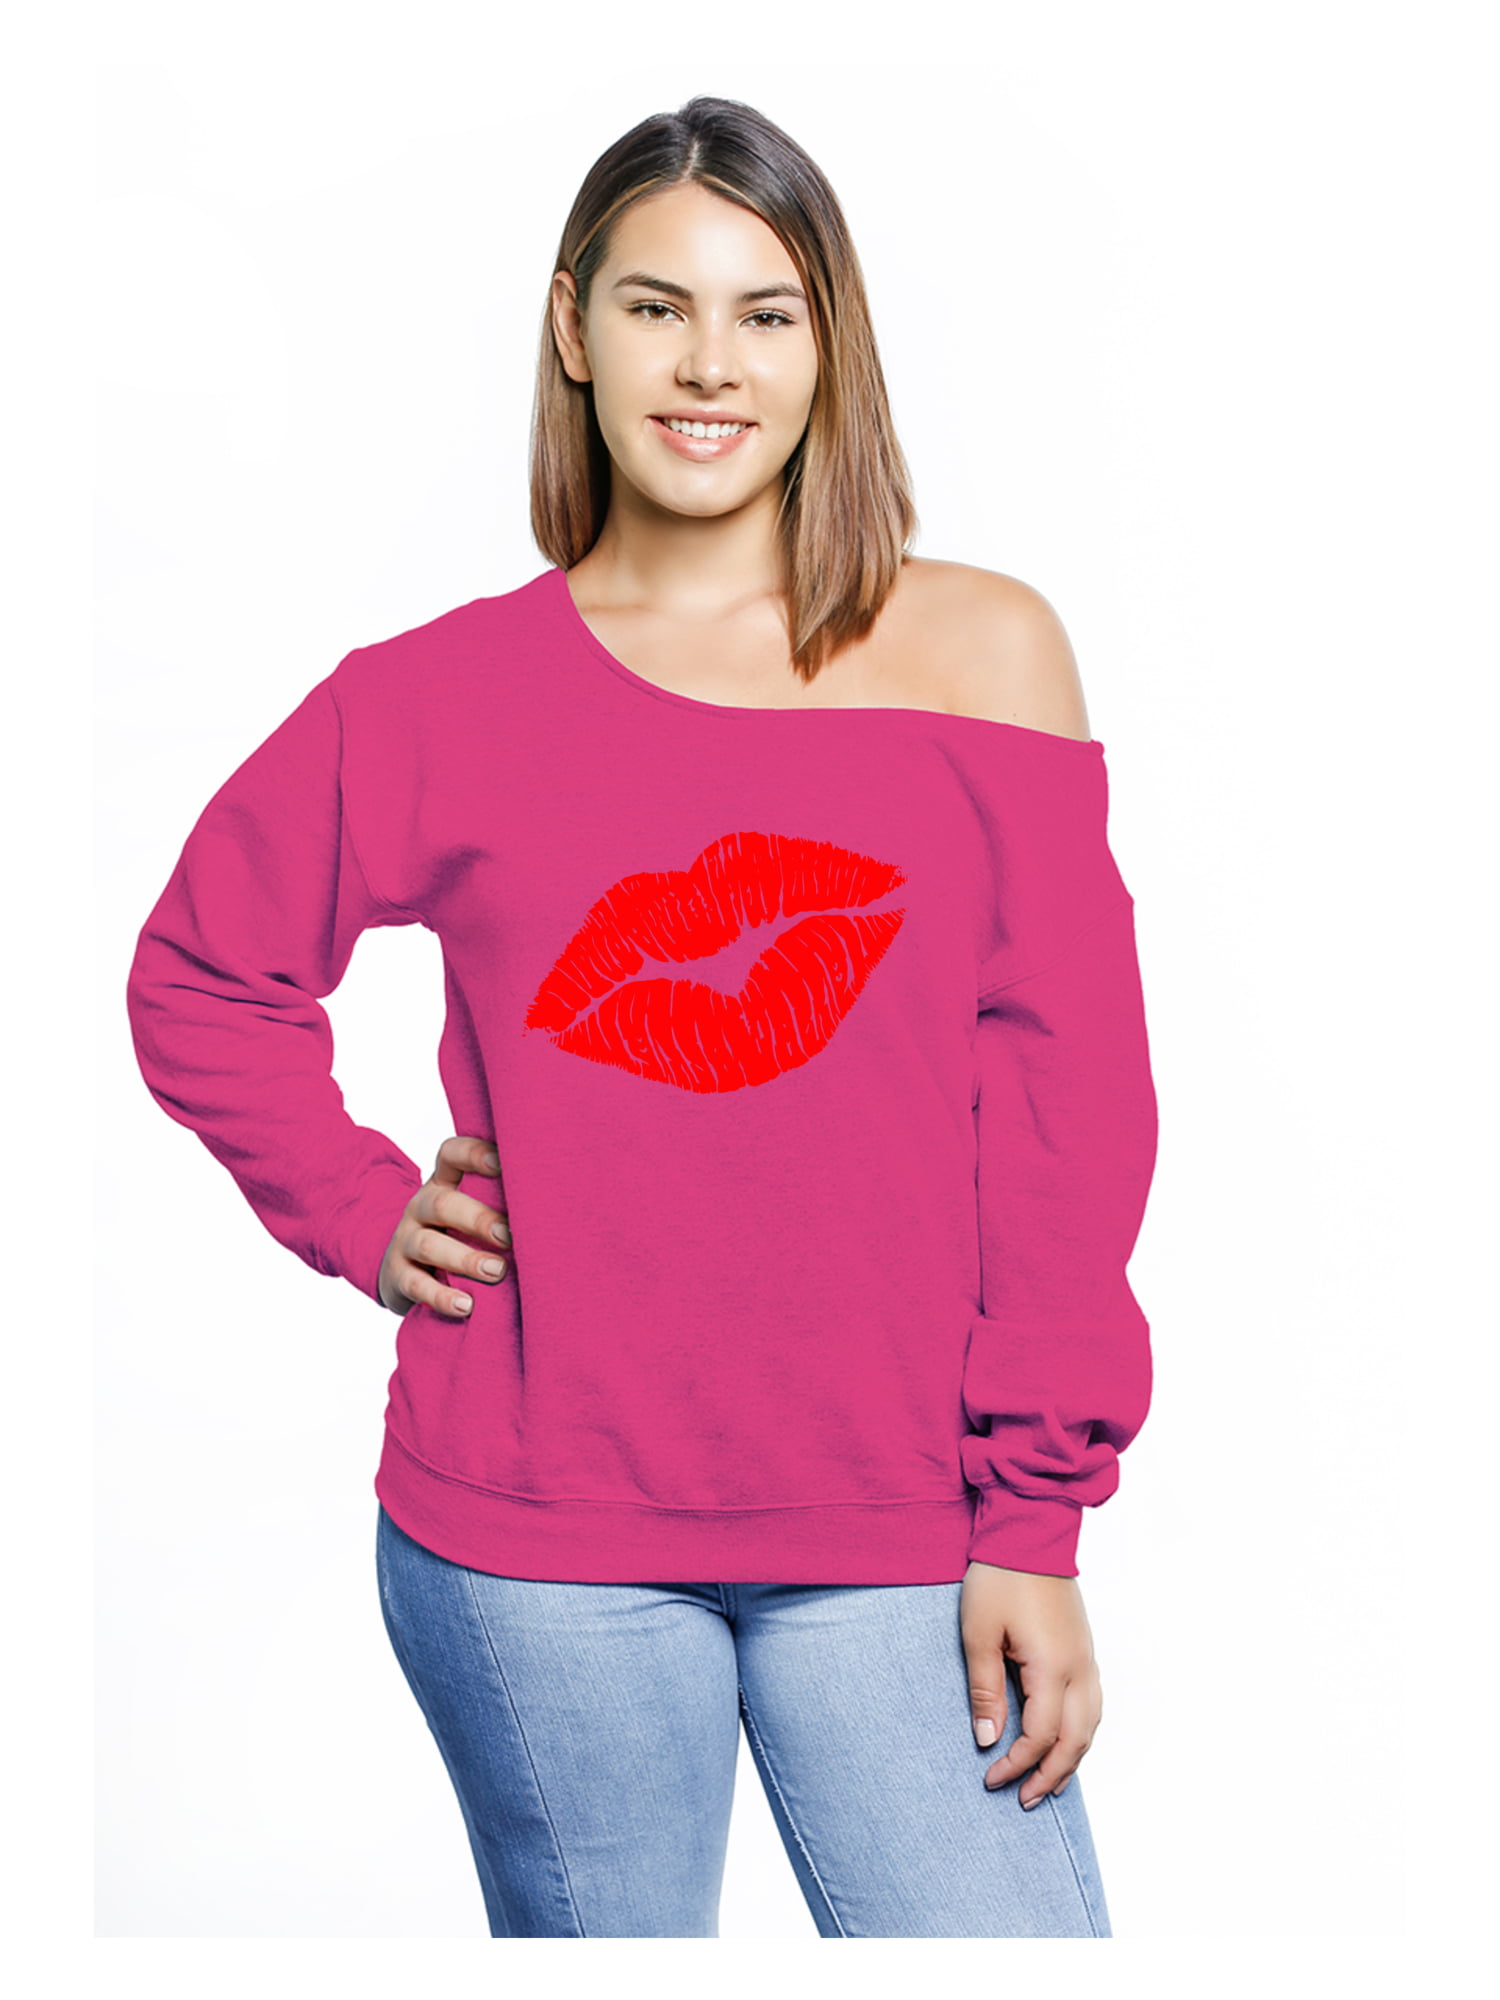 Plus Size Women Sweatshirts Baggy Slouchy Women Oversized Sweater S M L XL  2XL Off the Shoulder Pink Tops 